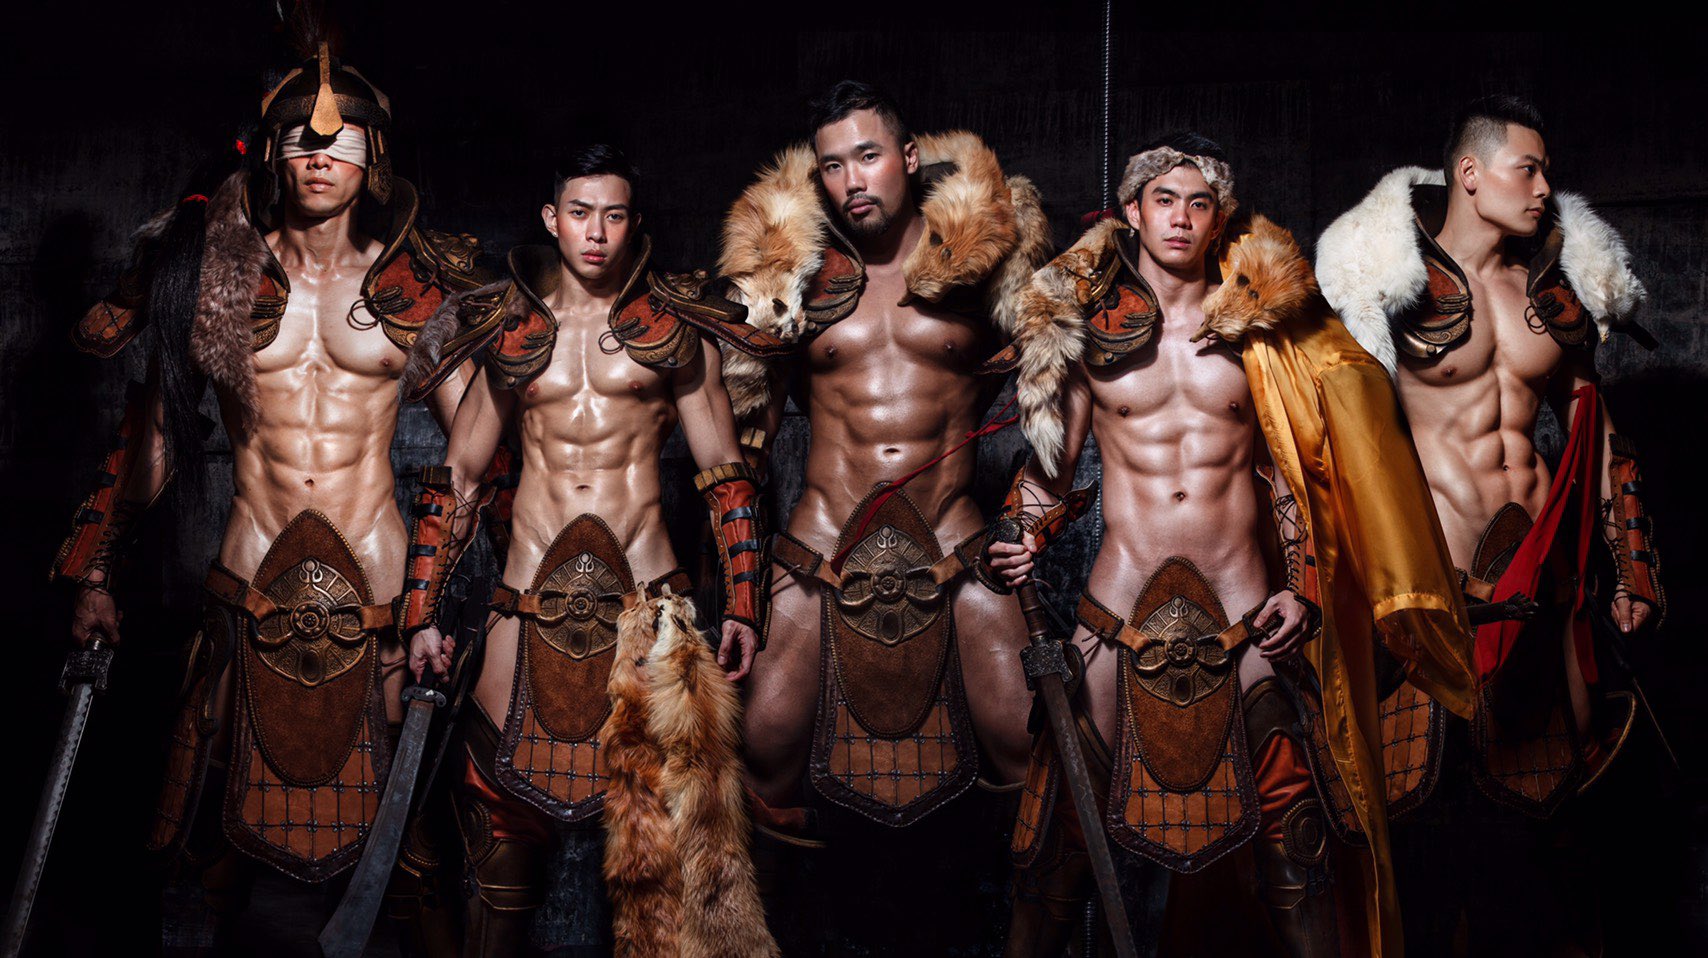 Michael cheung on Twitter: "蒙 古 戰 士 #muscleasian #bodybuilder #asianma...